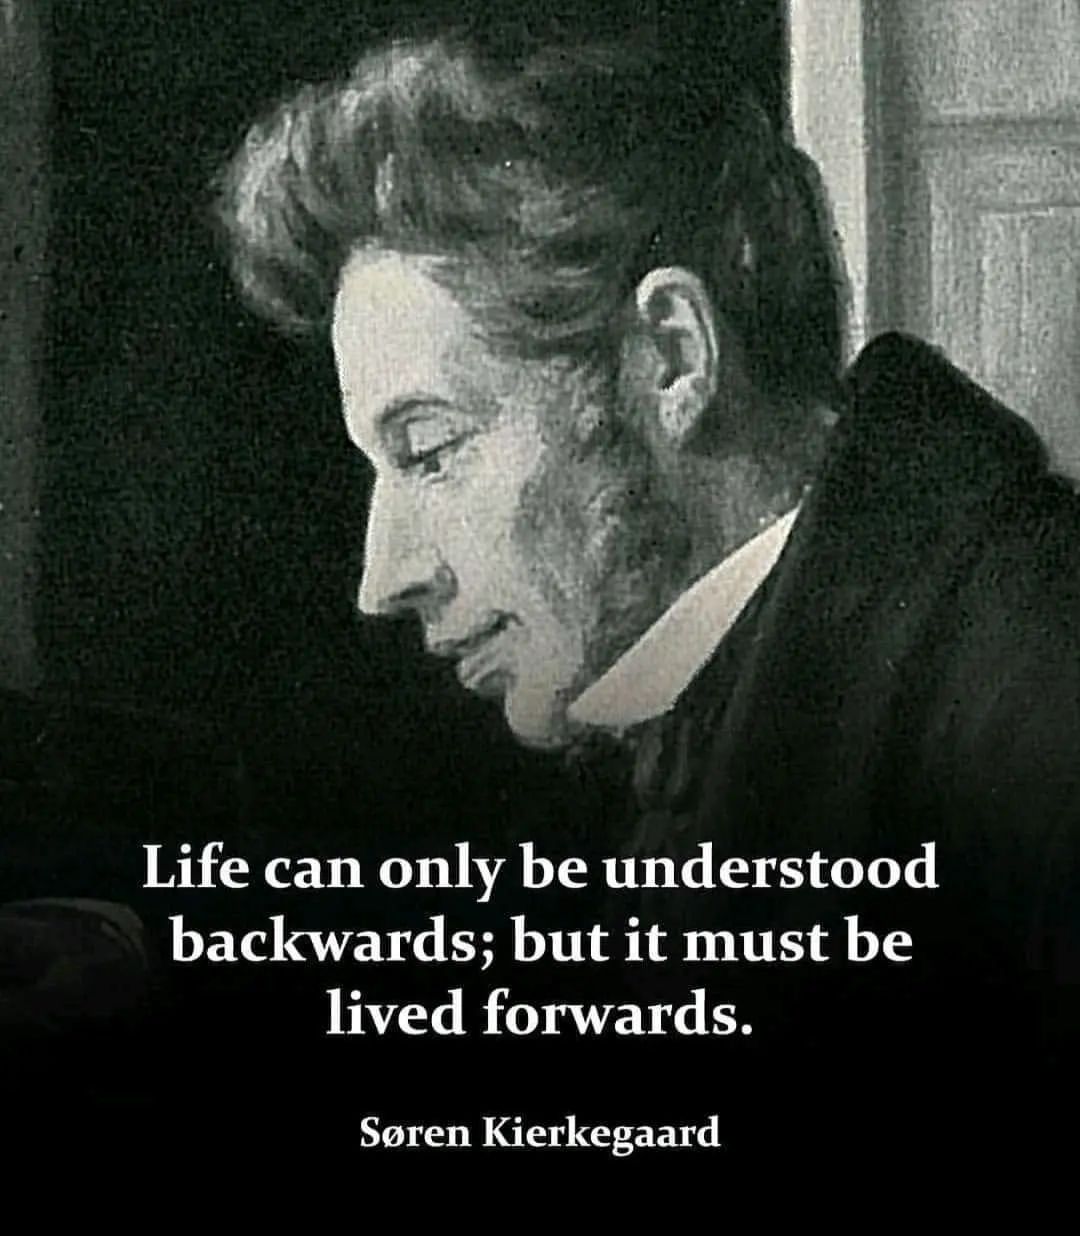 "Life can only be understood backwards; but it must be lived forwards." Søren Kierkegaard.